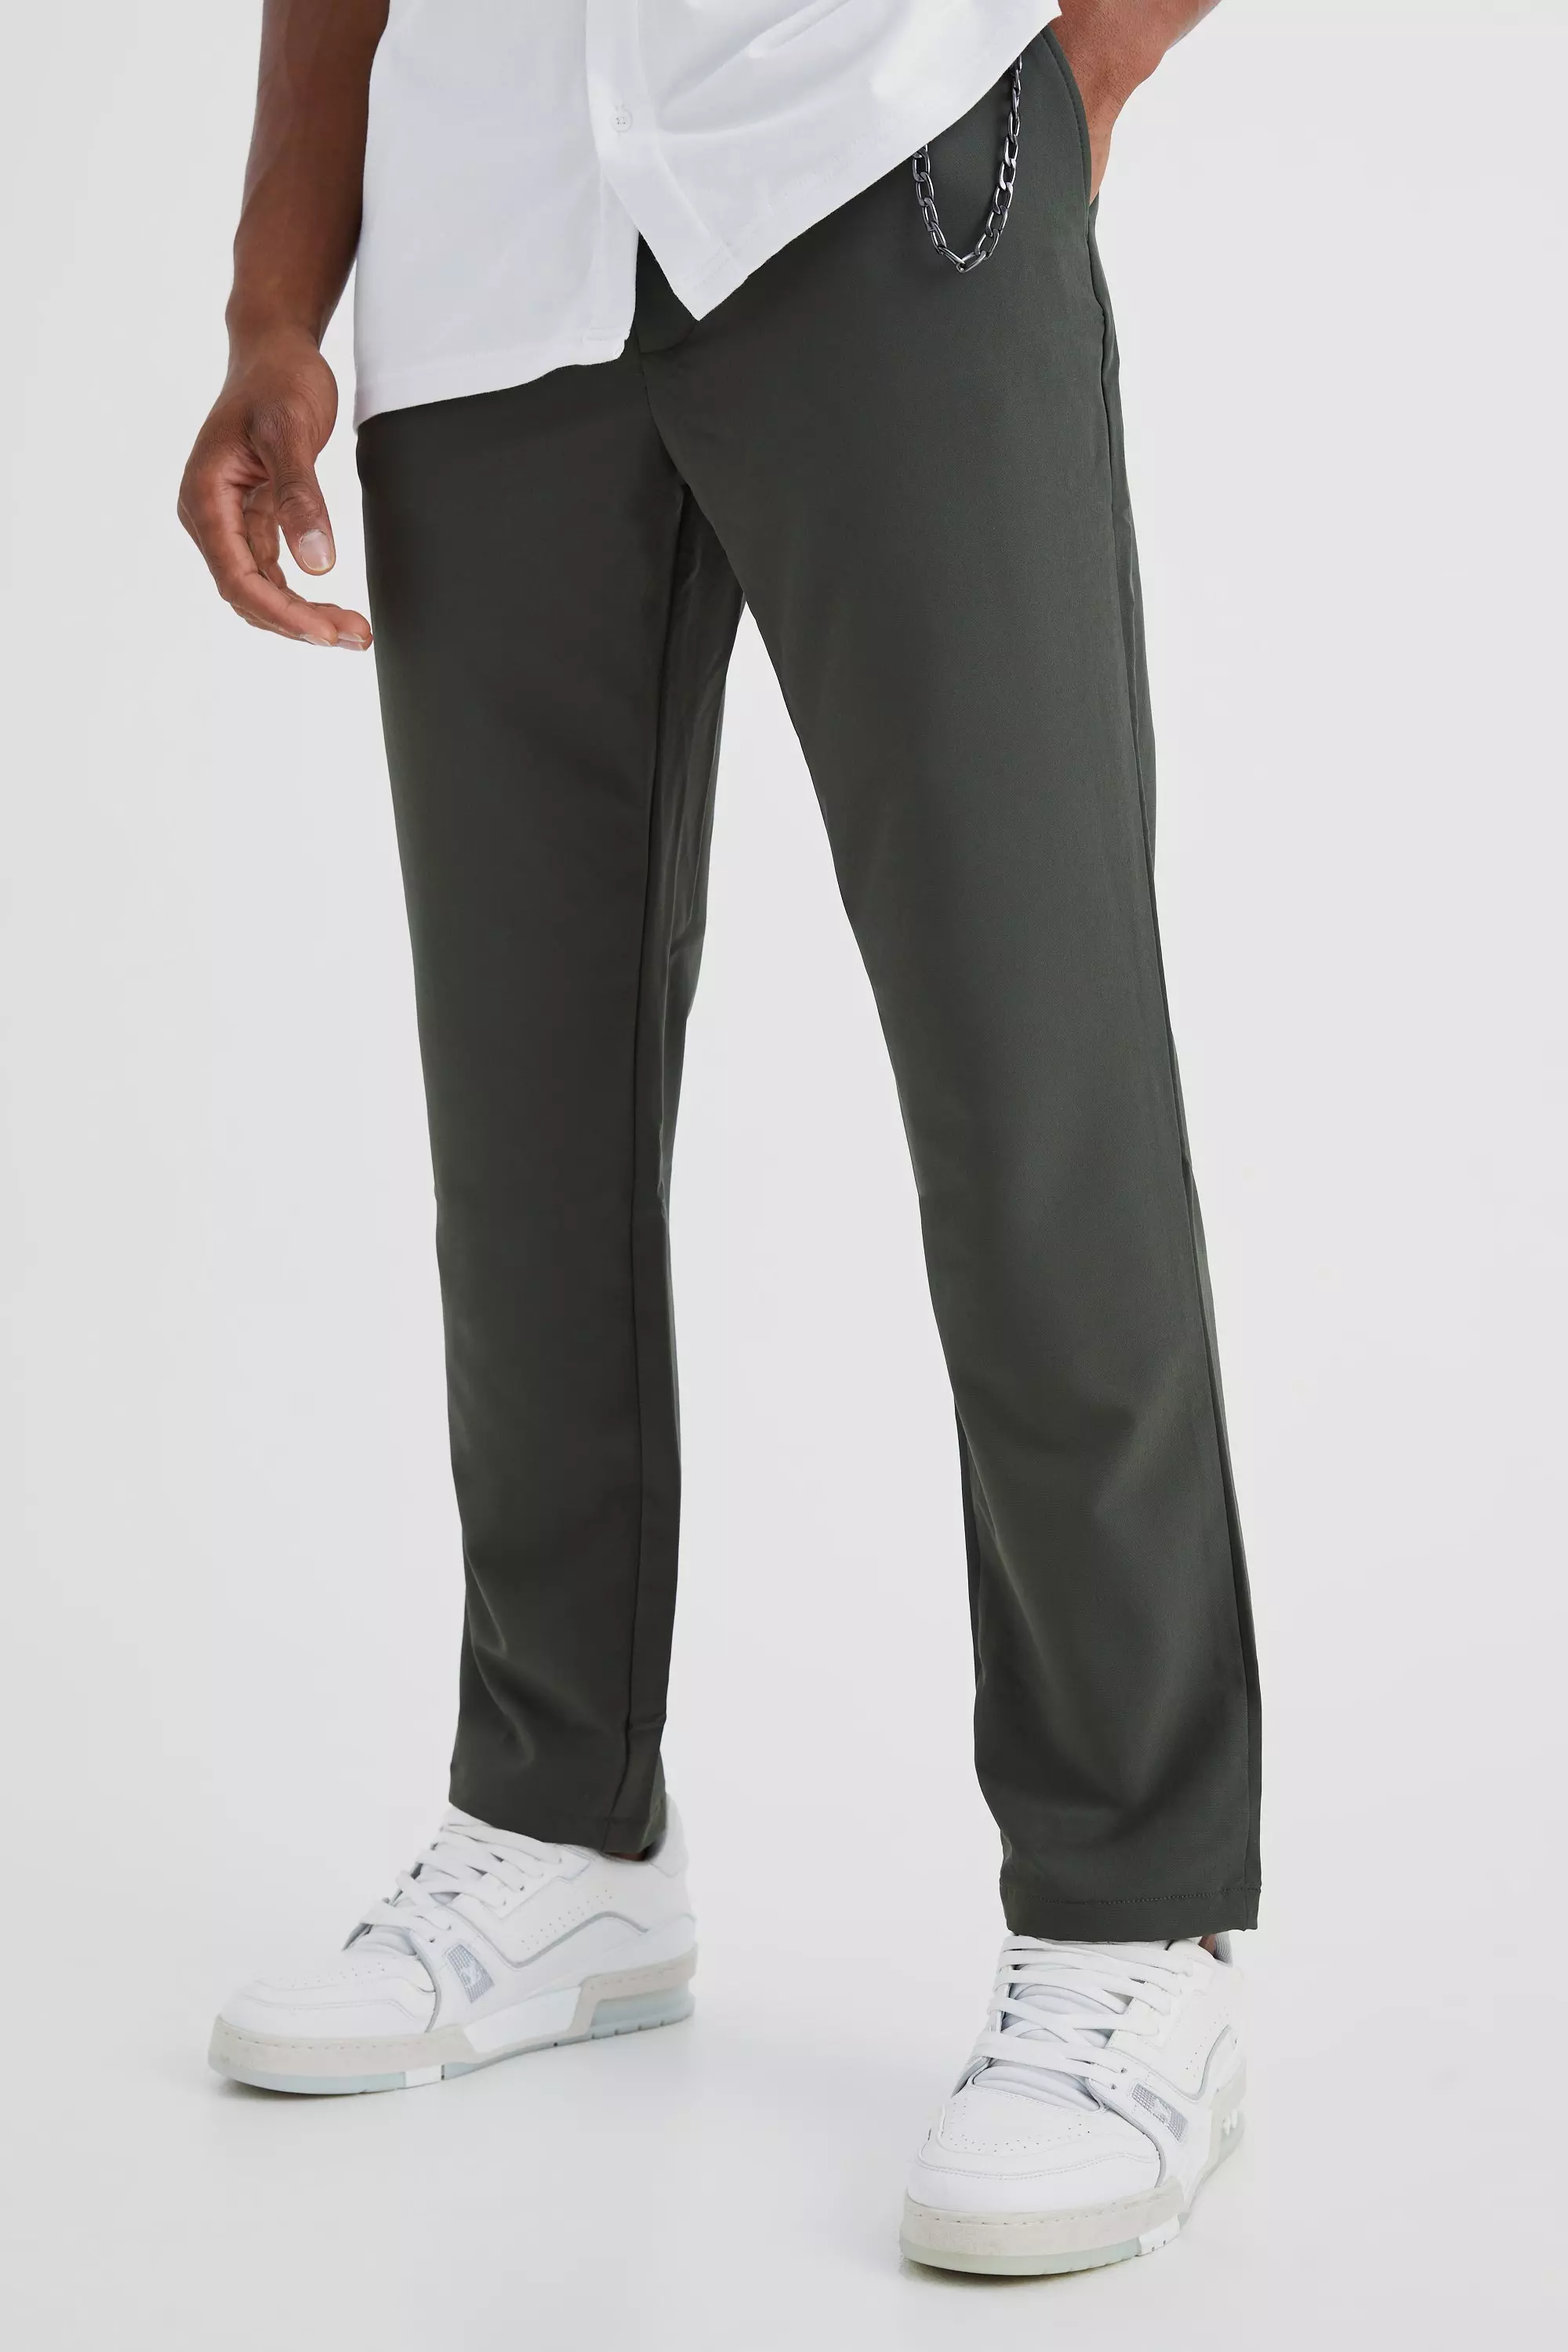 Elasticated Slim Crop 4 Way Stretch Chain Pants Khaki